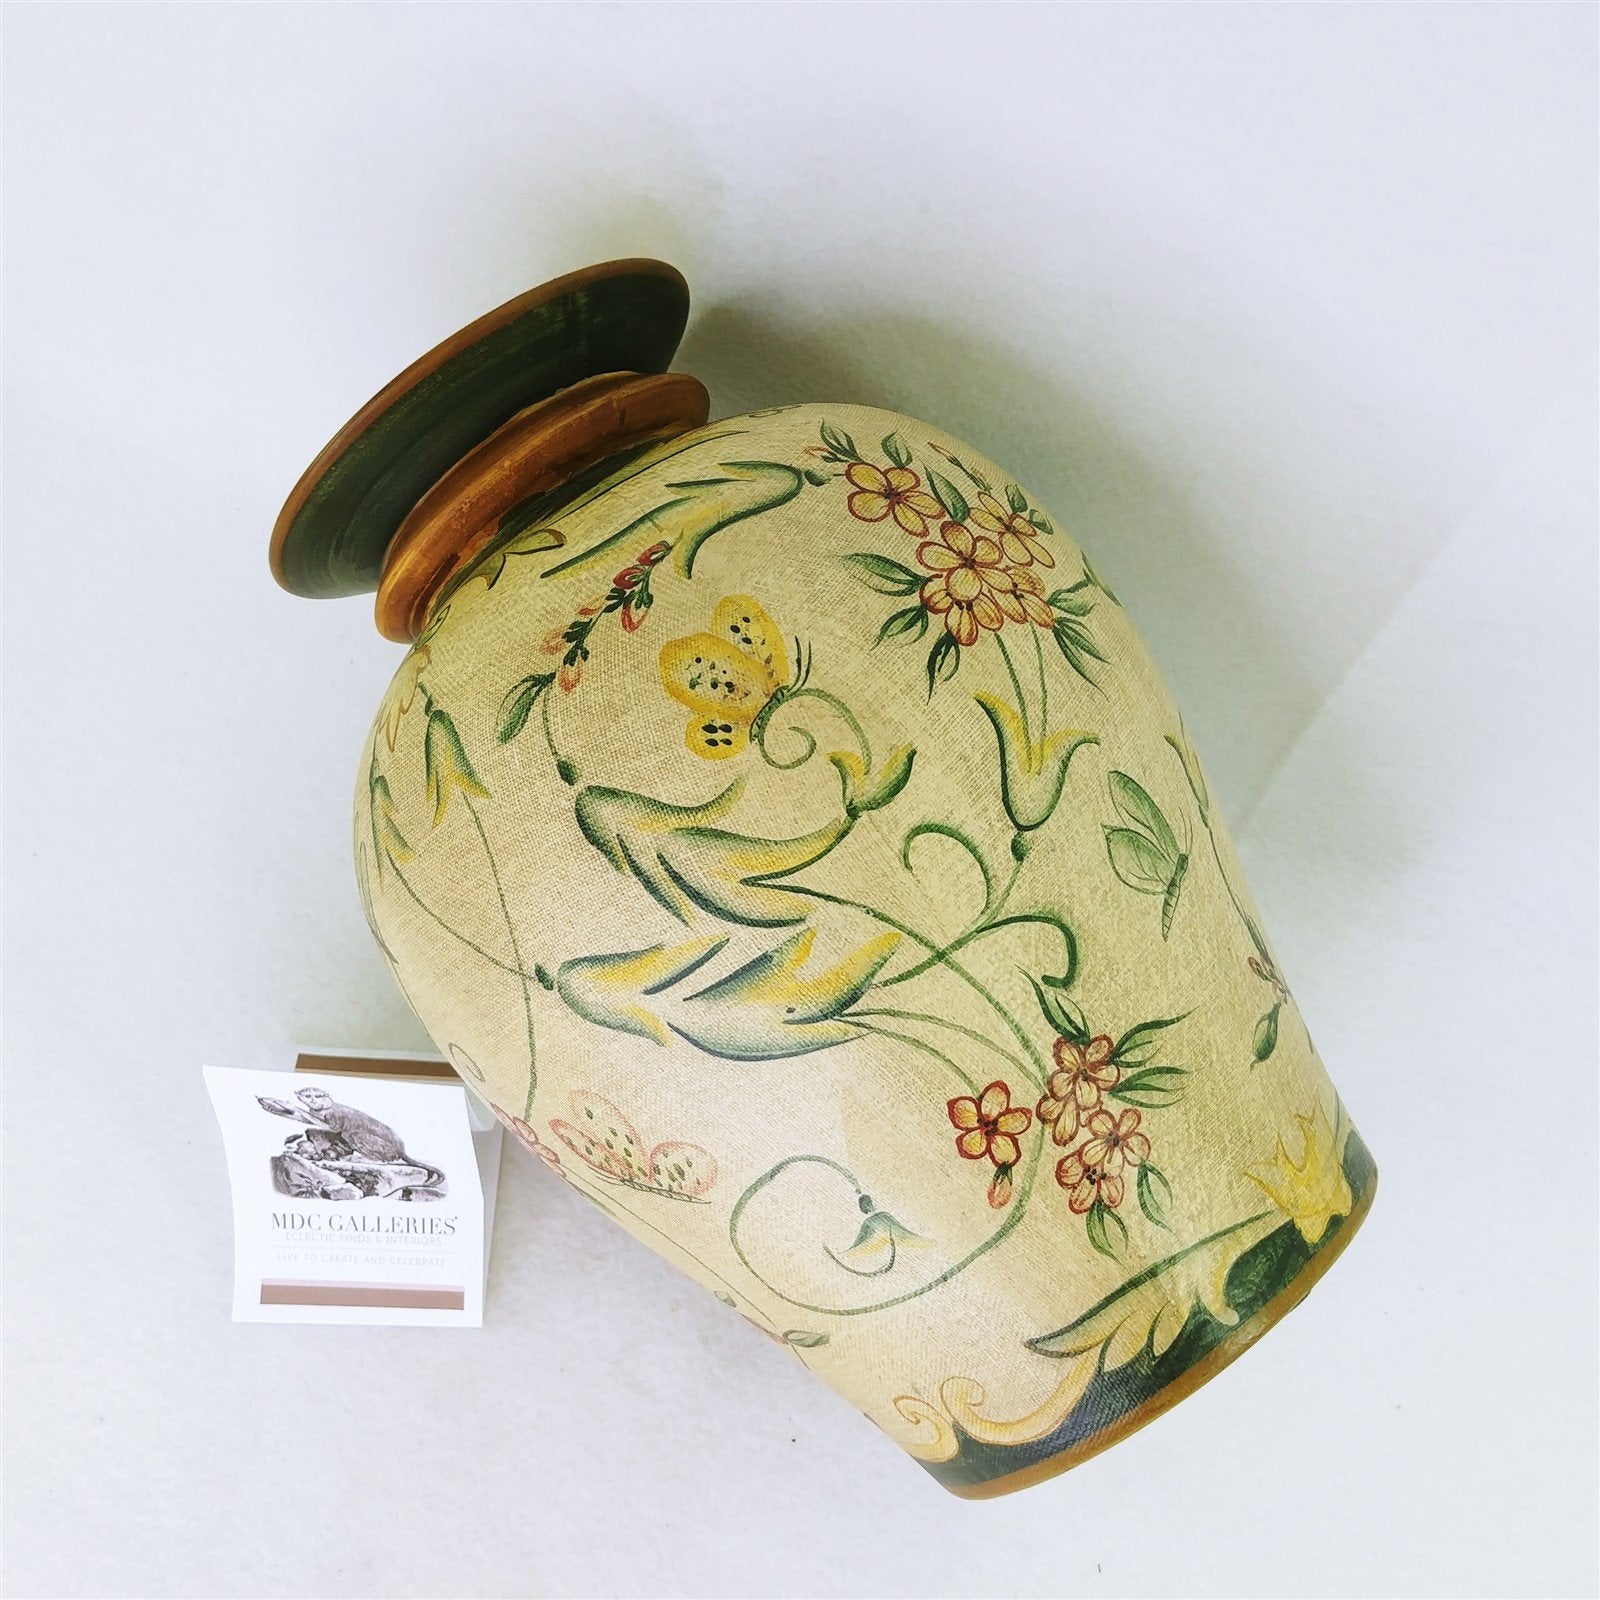 Vase Florals and Butterflies on Linen Look Ceramic Prima Bella Casa by Ganz 12"